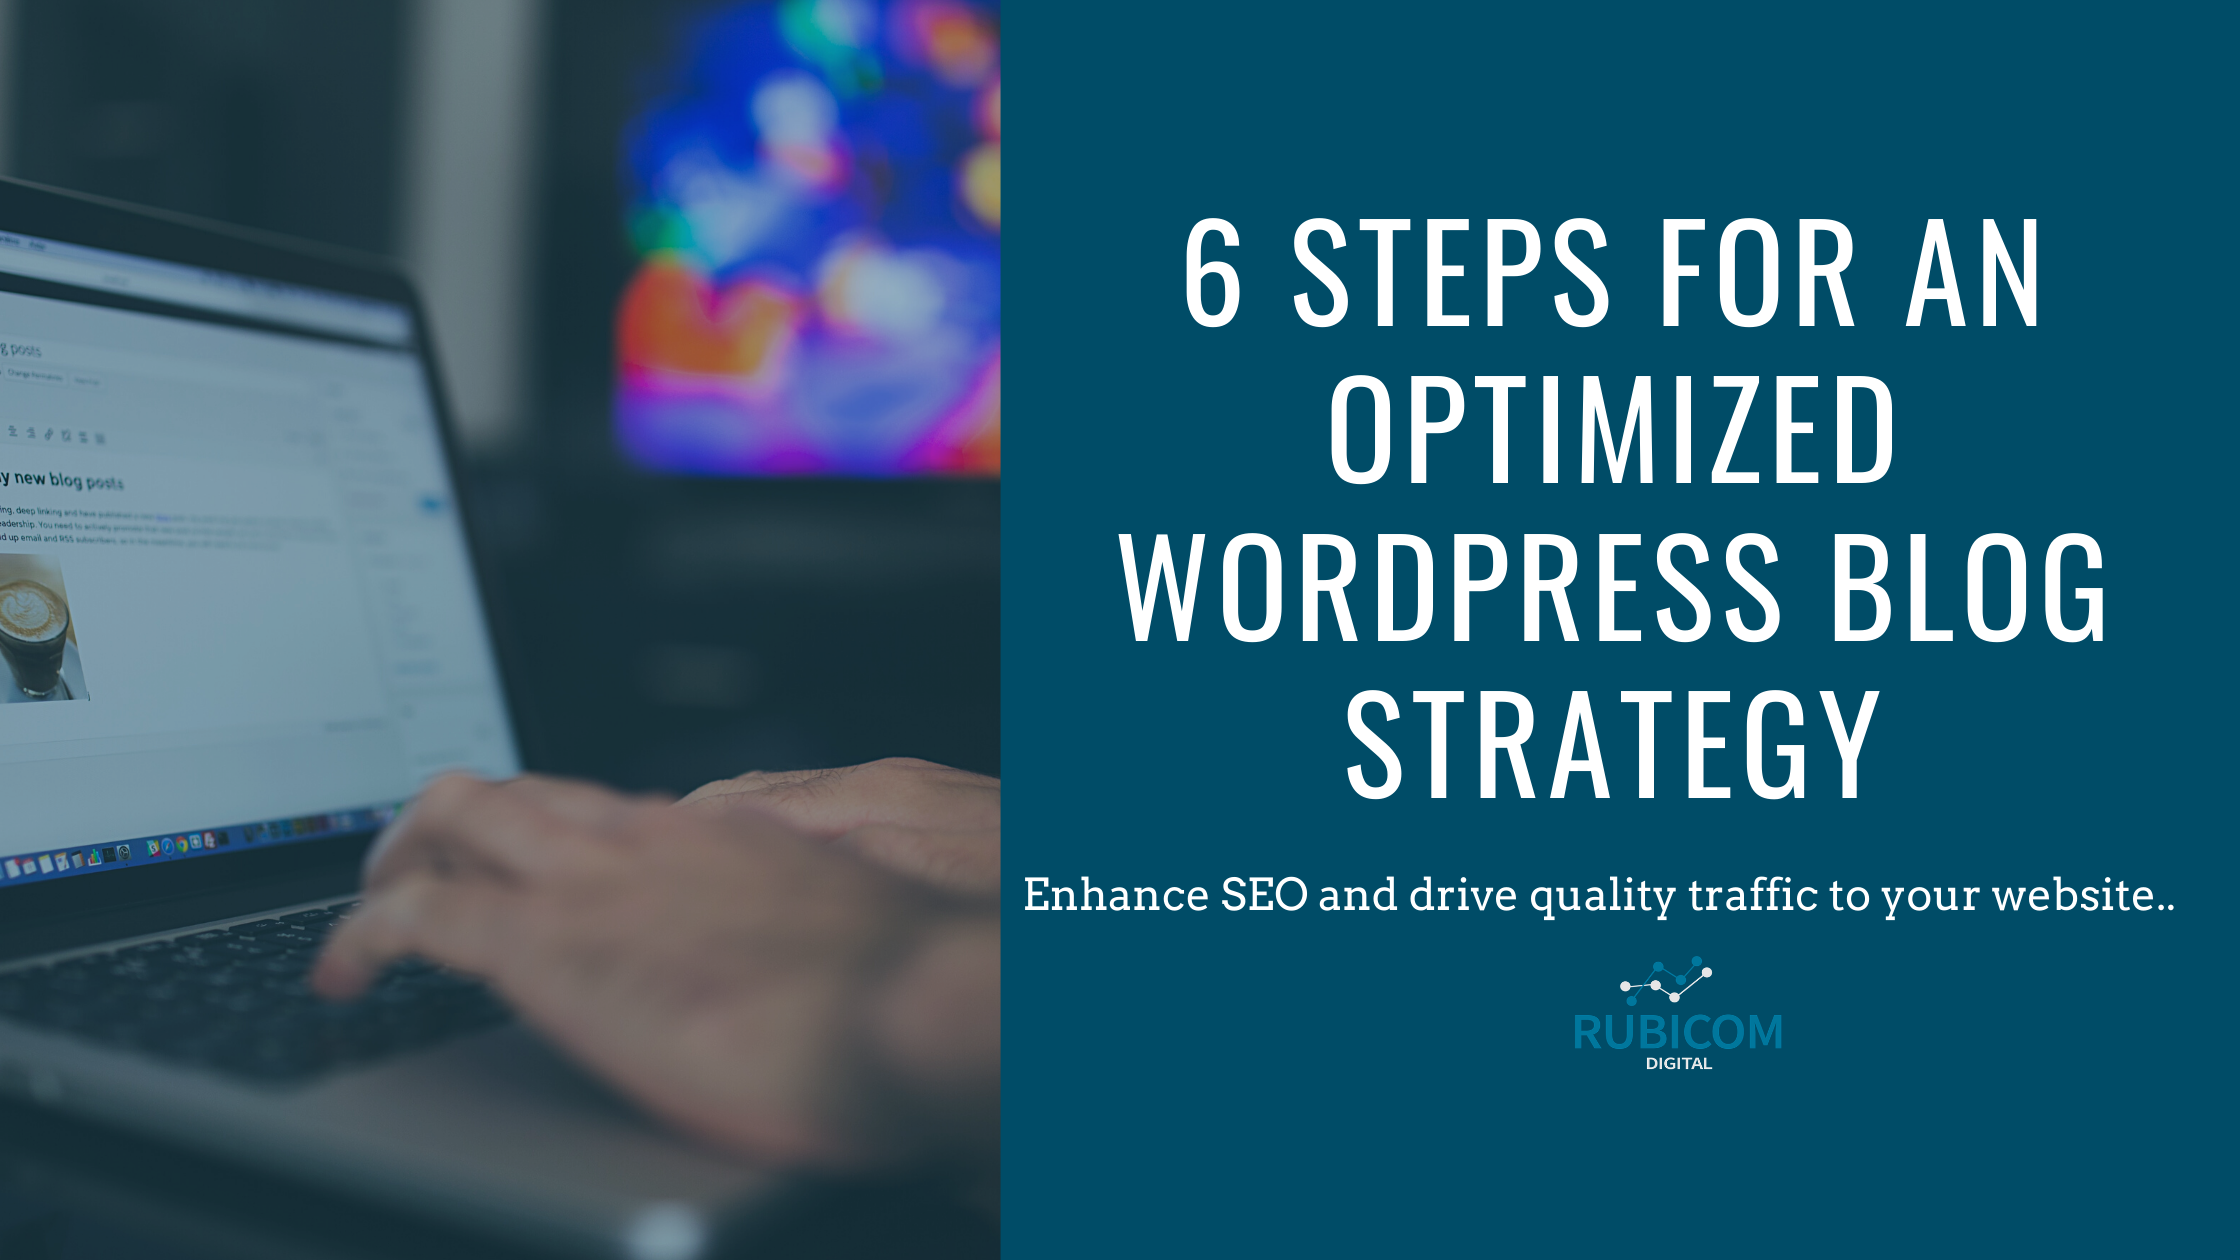 WordPress Blog Strategy to Enhance SEO